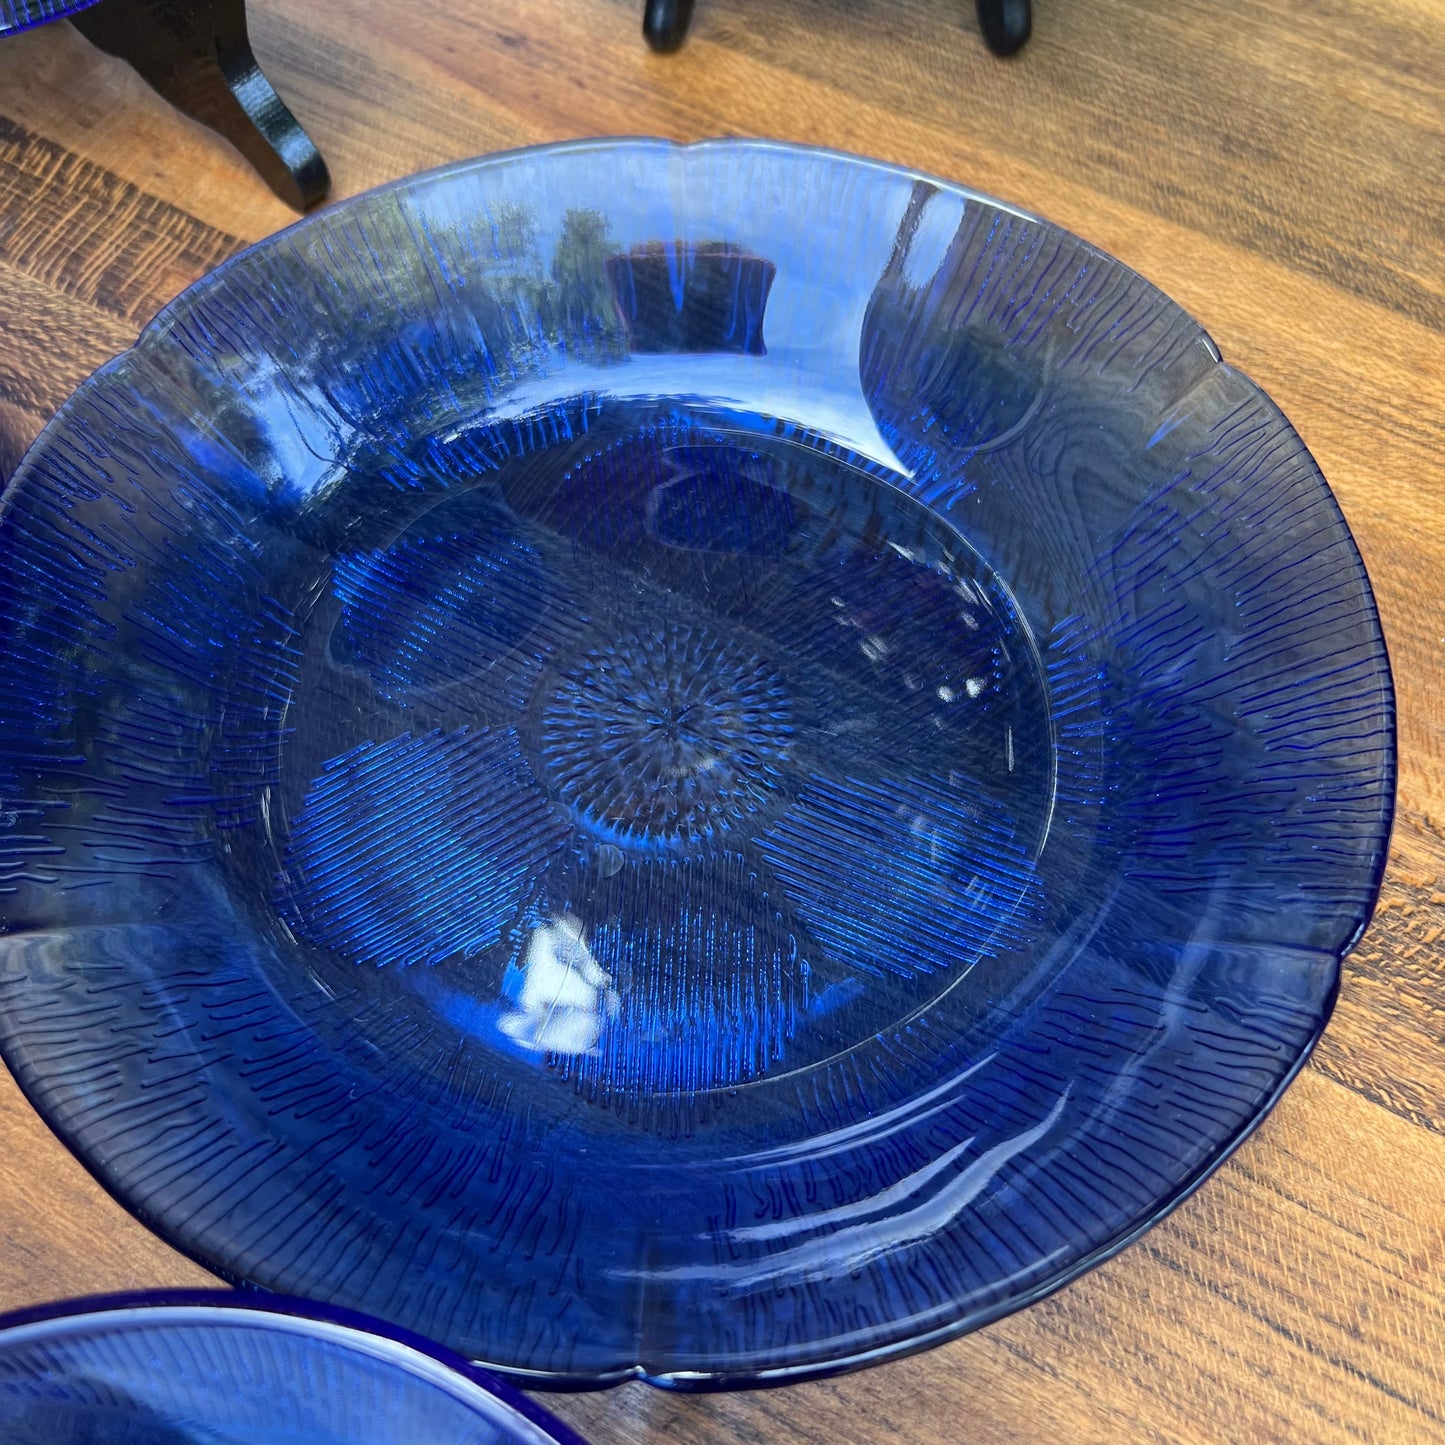 8 Piece French Arcoroc Cobalt Blue Plates & Bowls Collection